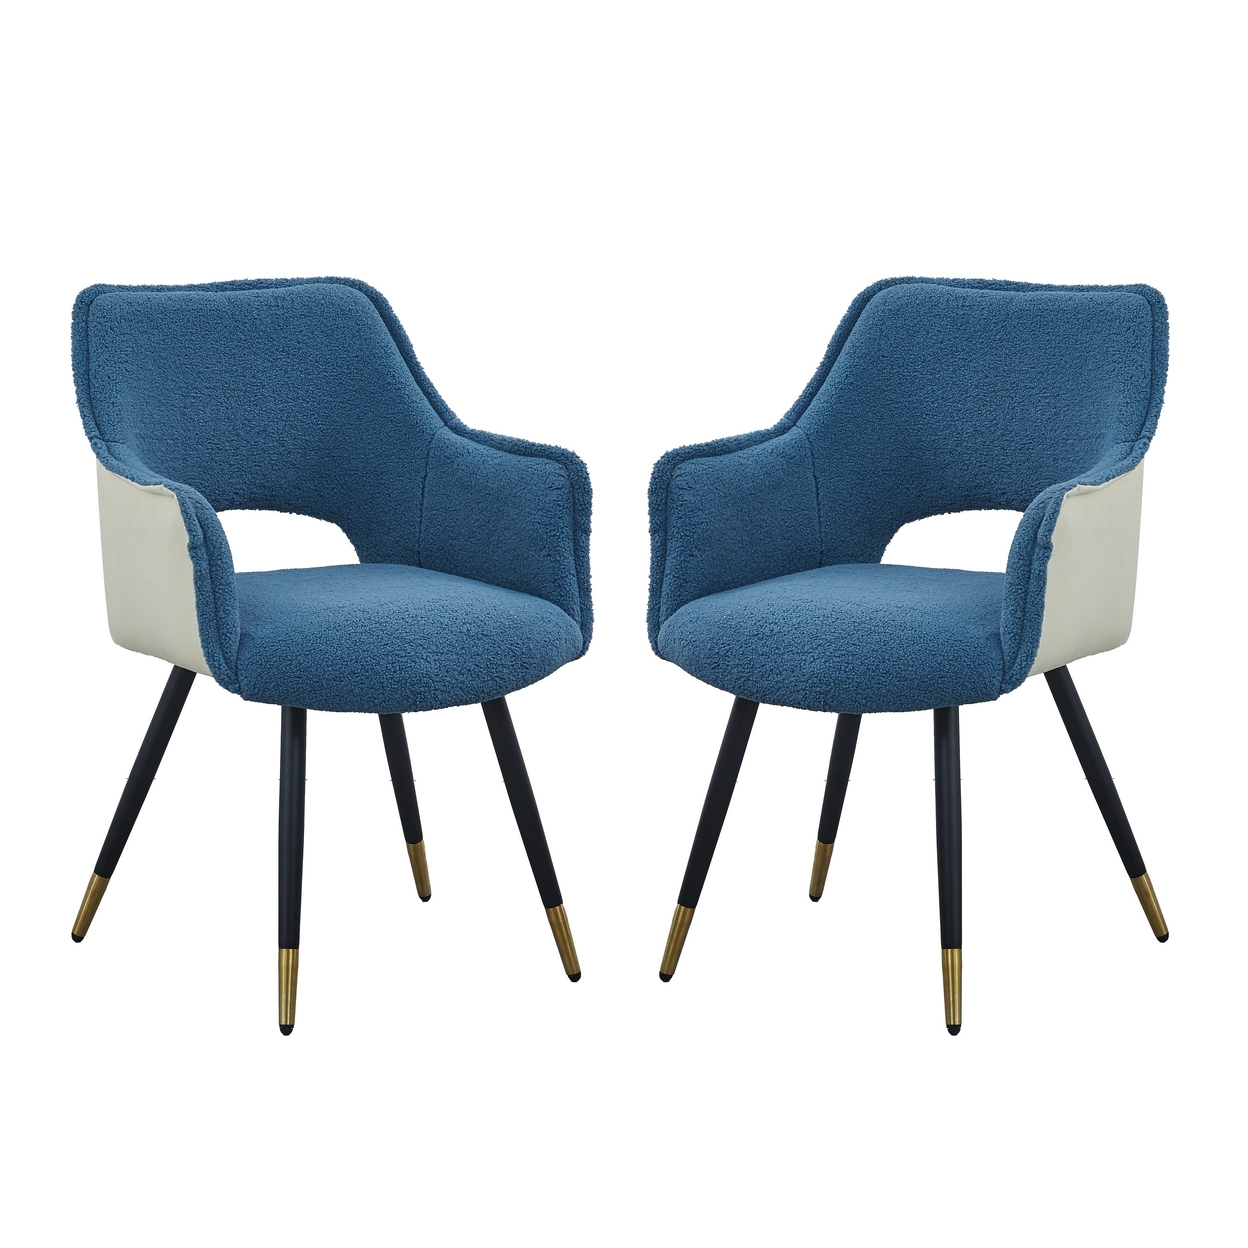 Eden 23 Inch Modern Dining Chair, White Fabric, Blue Metal Legs, Set Of 2- Saltoro Sherpi